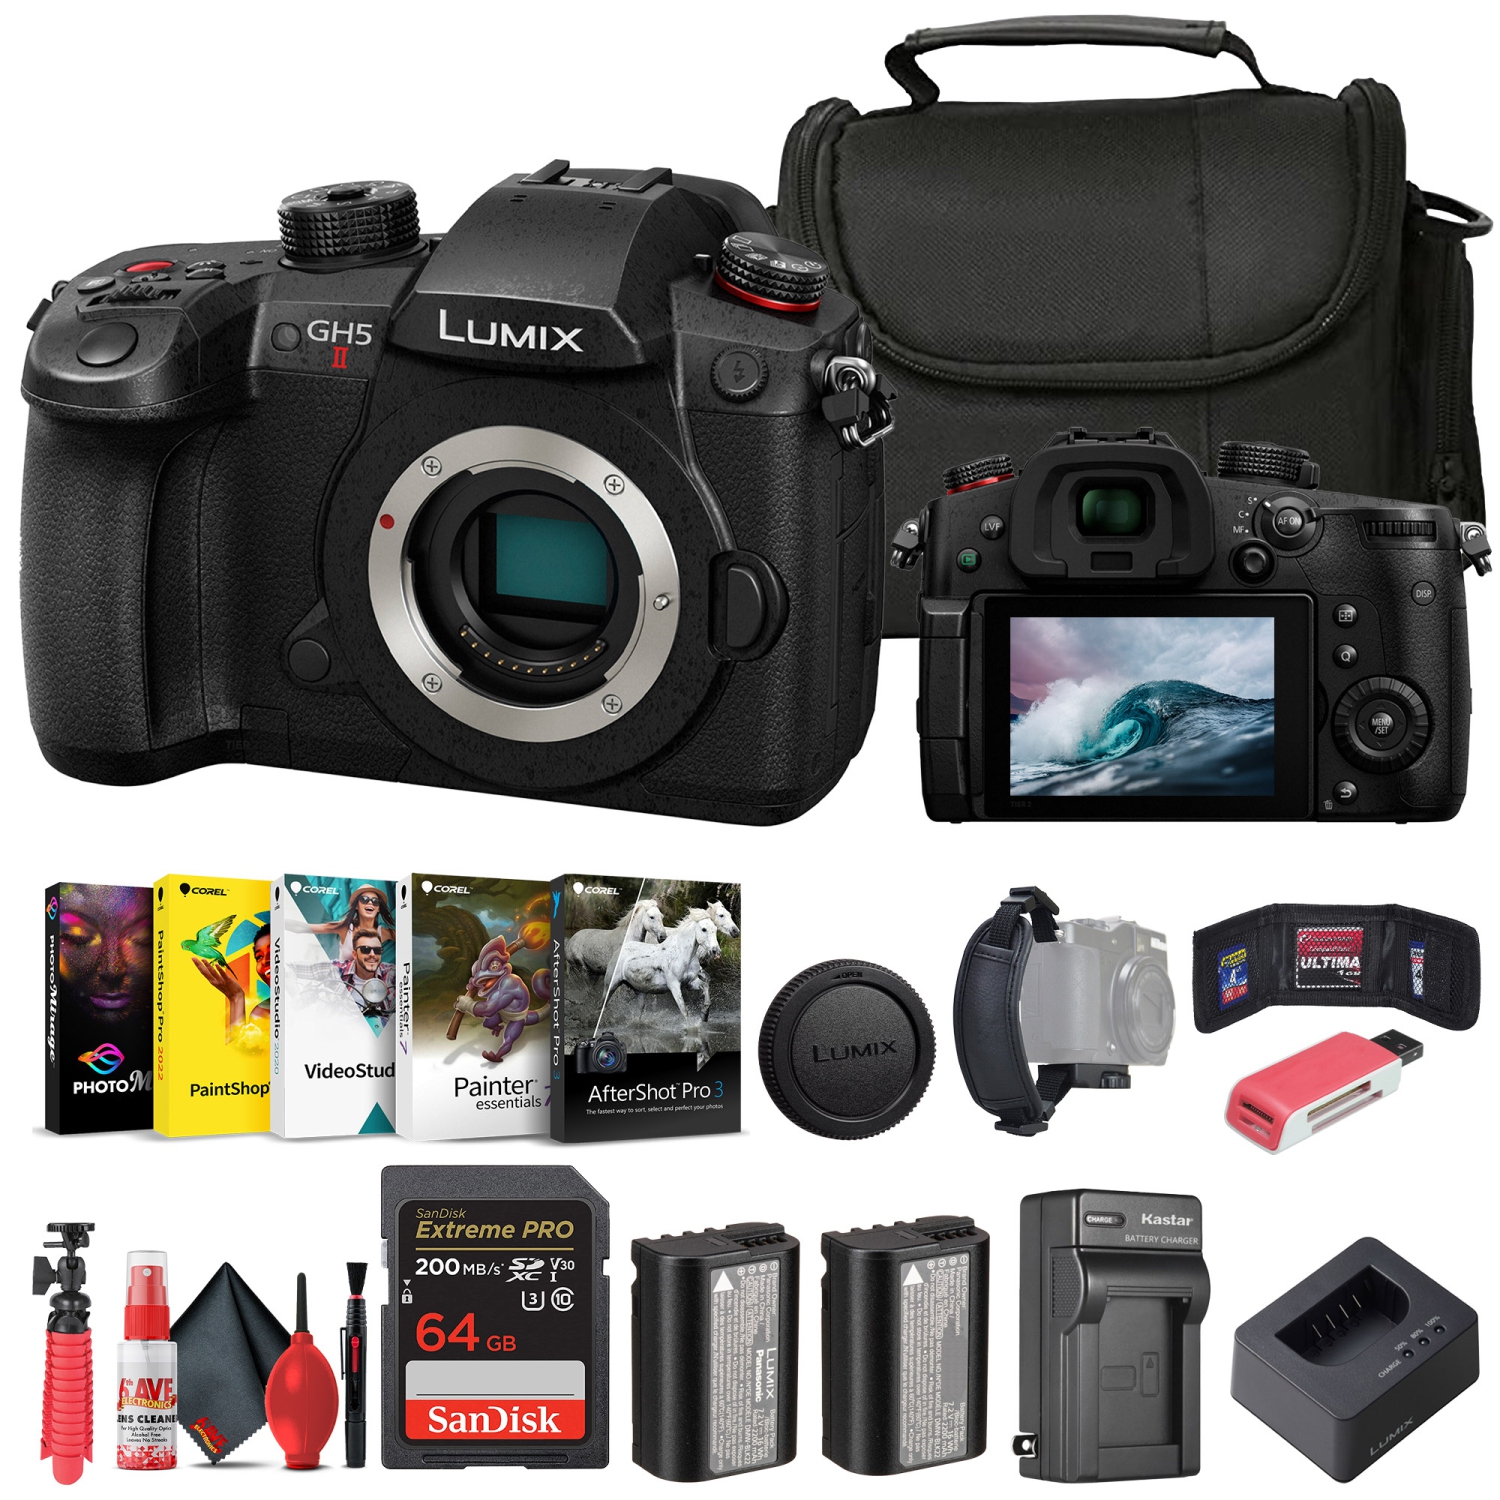 Panasonic Lumix GH5 II Mirrorless Camera + Corel Photo Software + Bag + 64GB Card + More